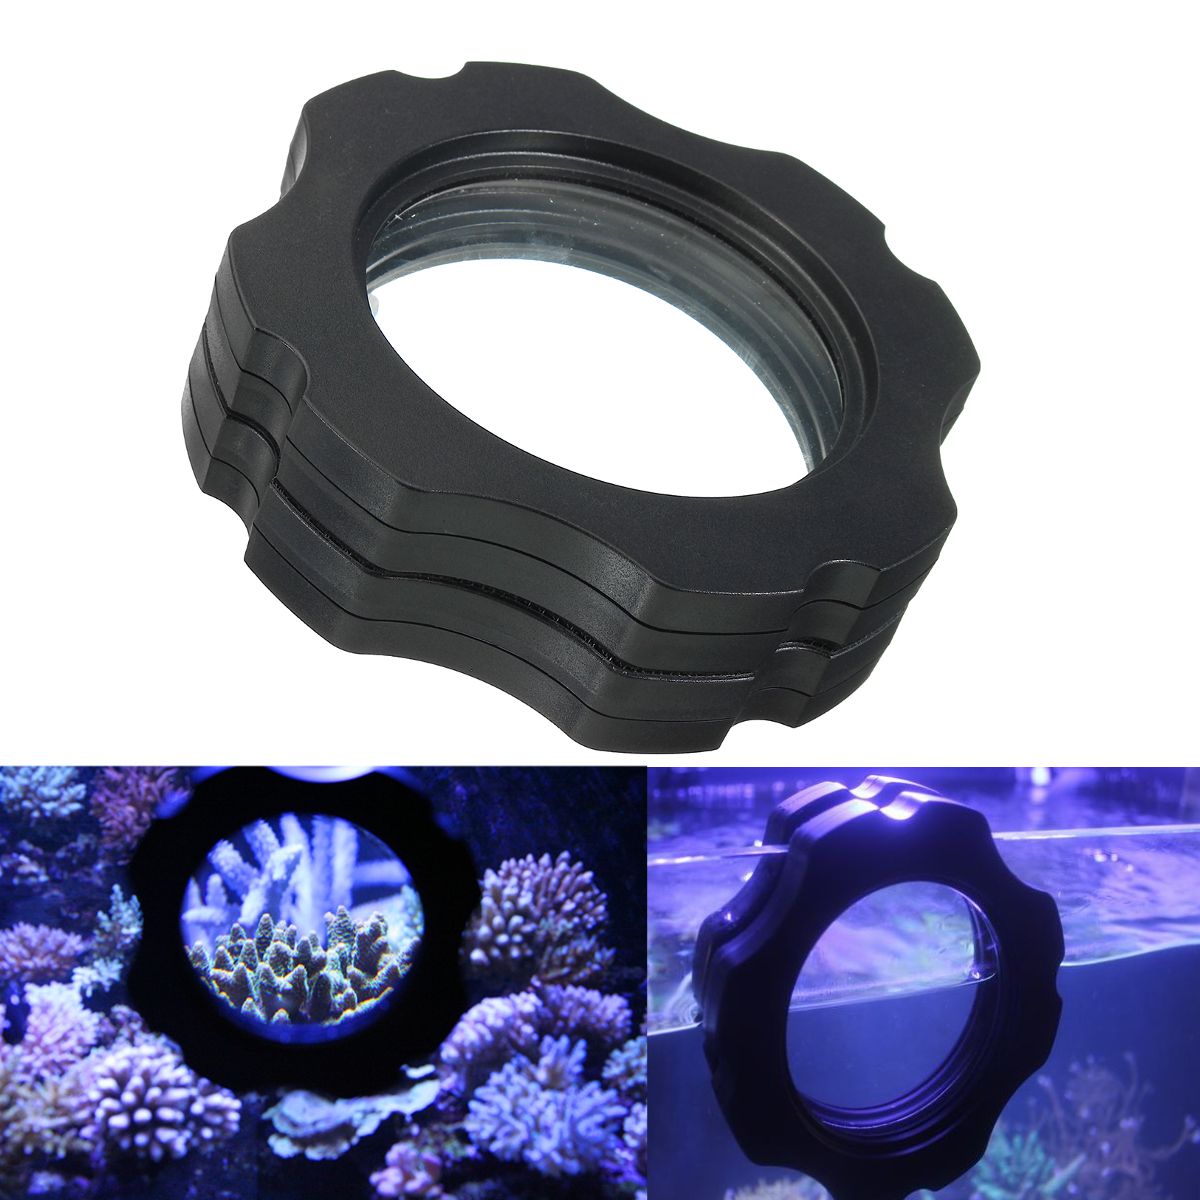 Aquarium-Magnetic-Fish-Tank-Glass-Cleaner-Scraper-Magnifier-Up-to-15mm-1352035